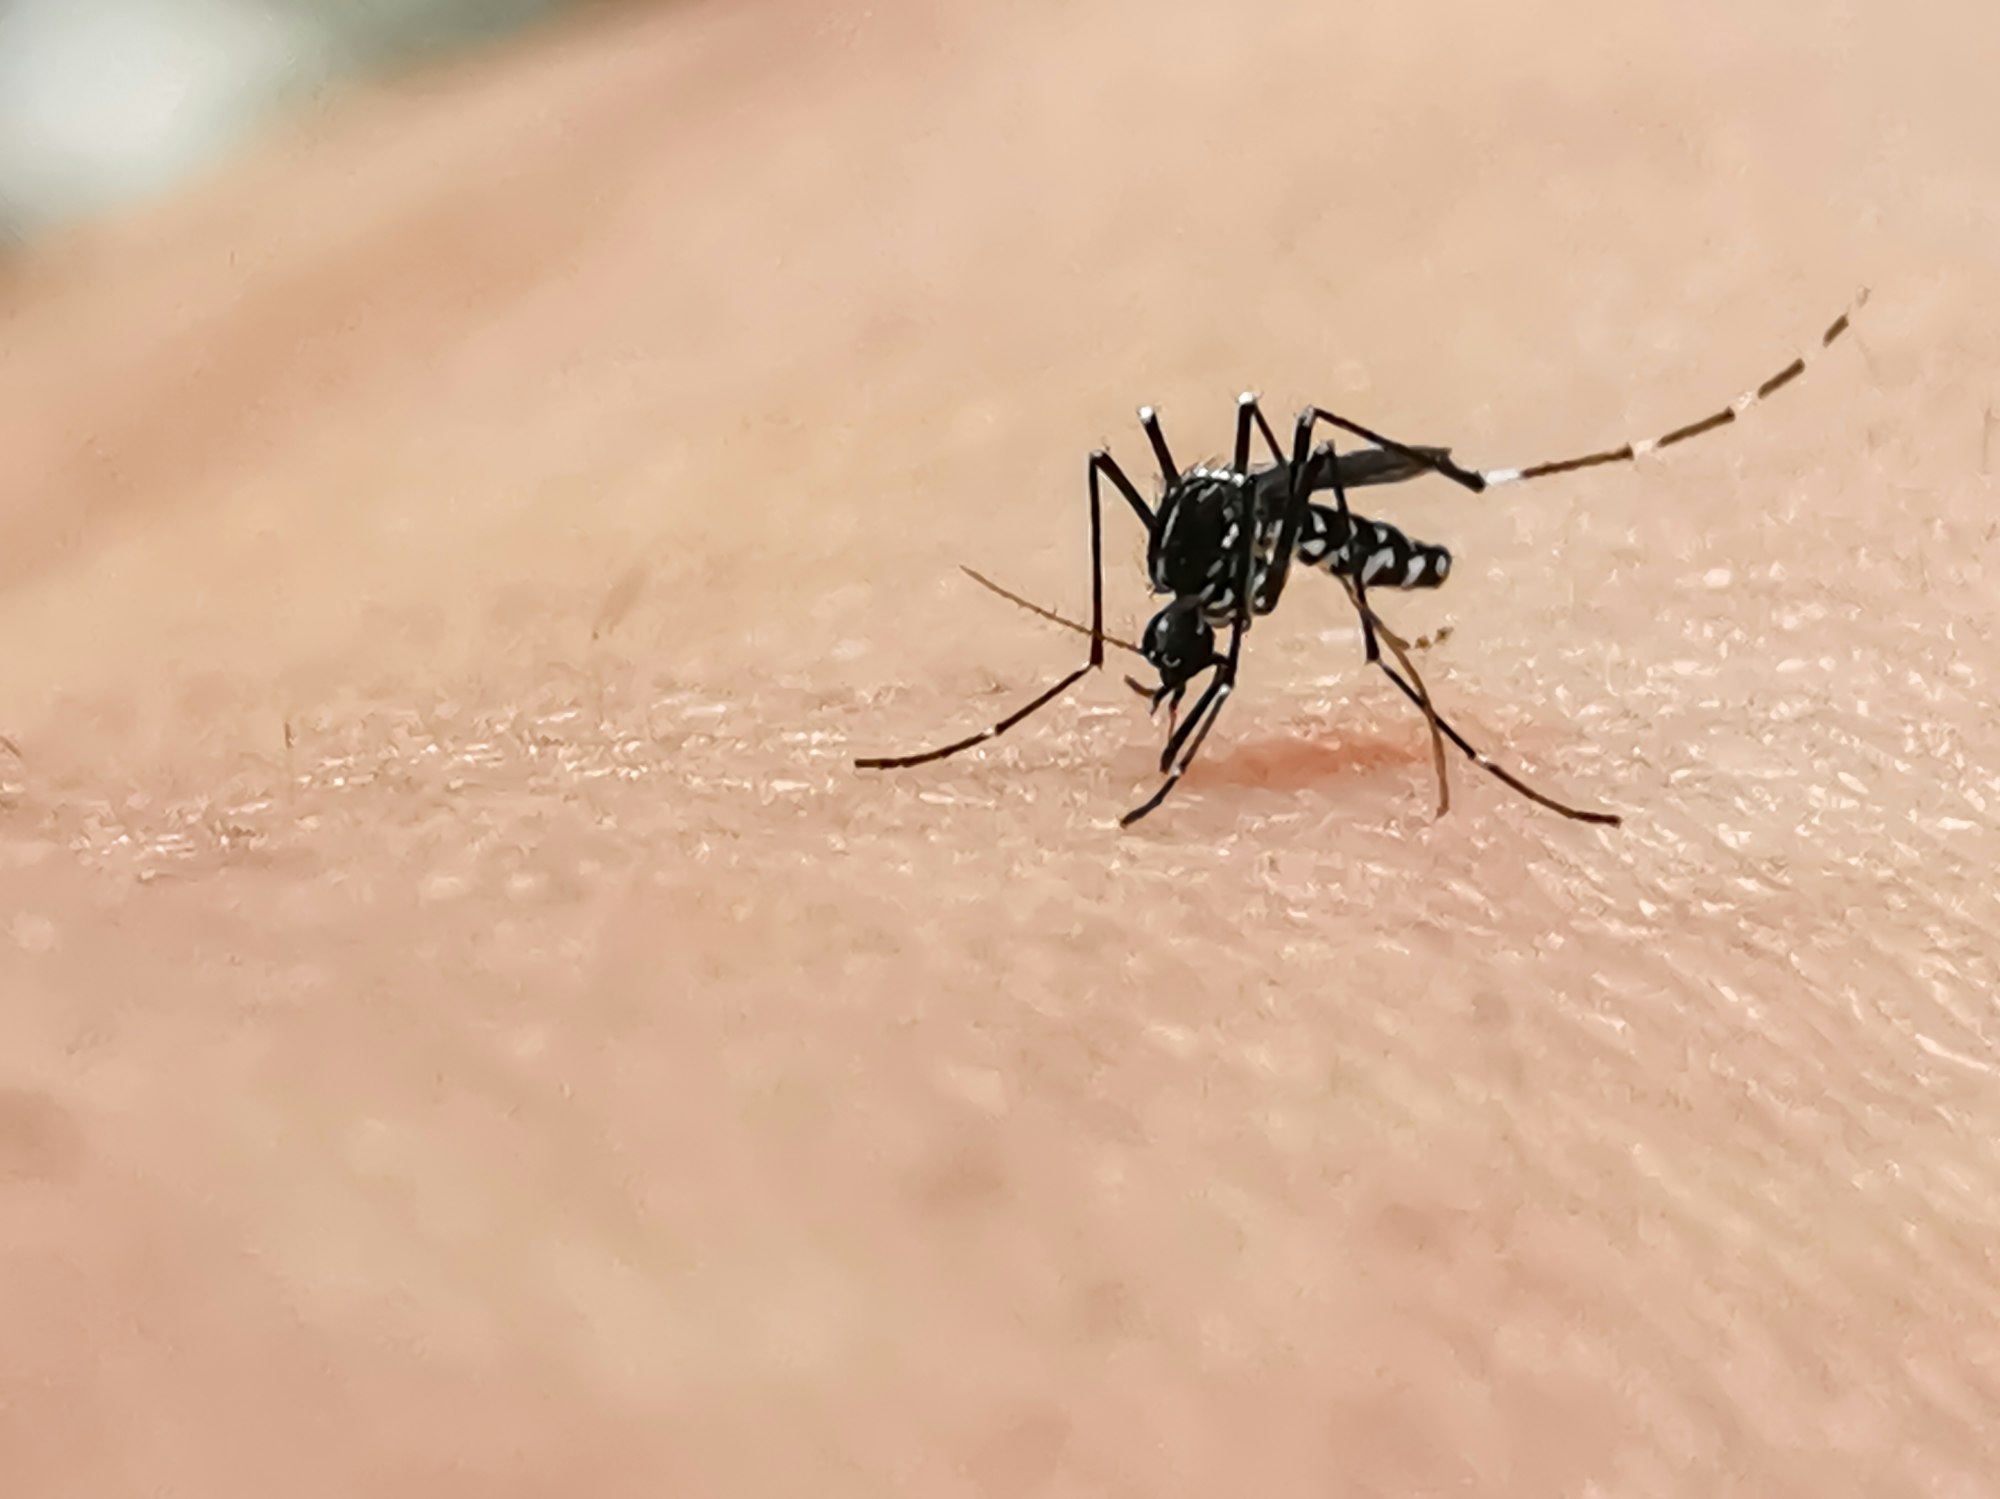 Mosquito bite.